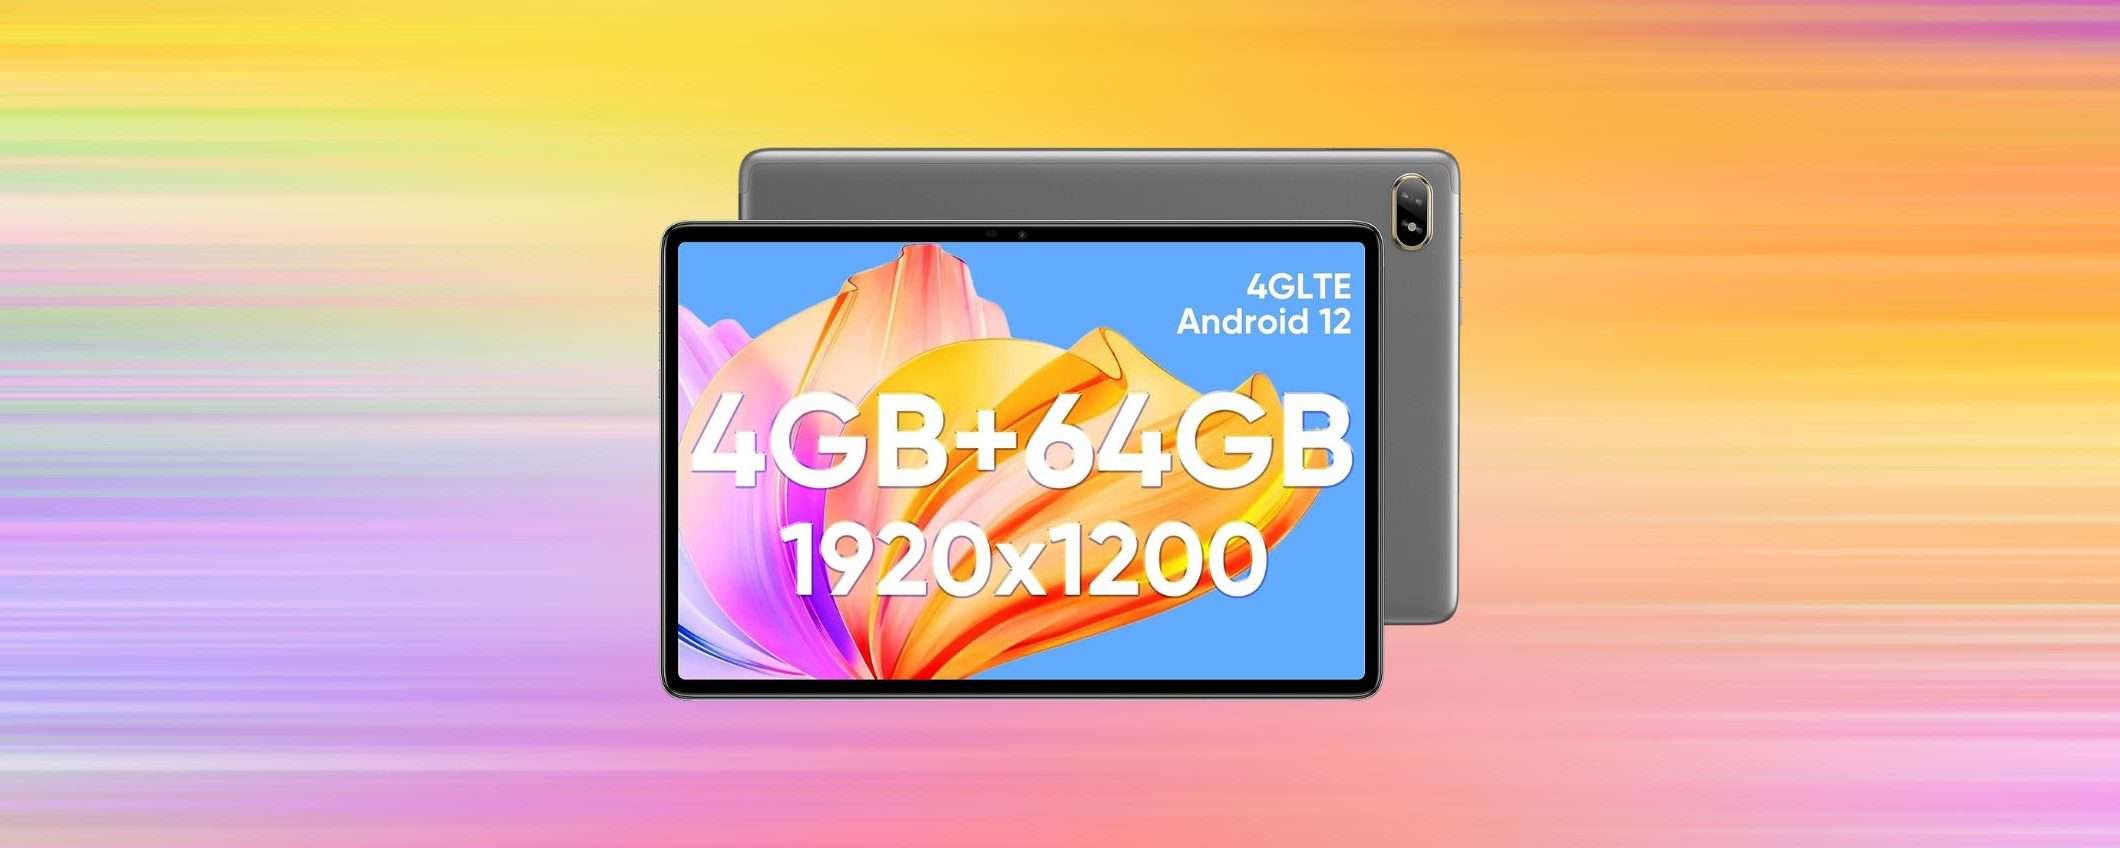 Tablet Android a 69,99 euro: Amazon A FUOCO con questa offerta